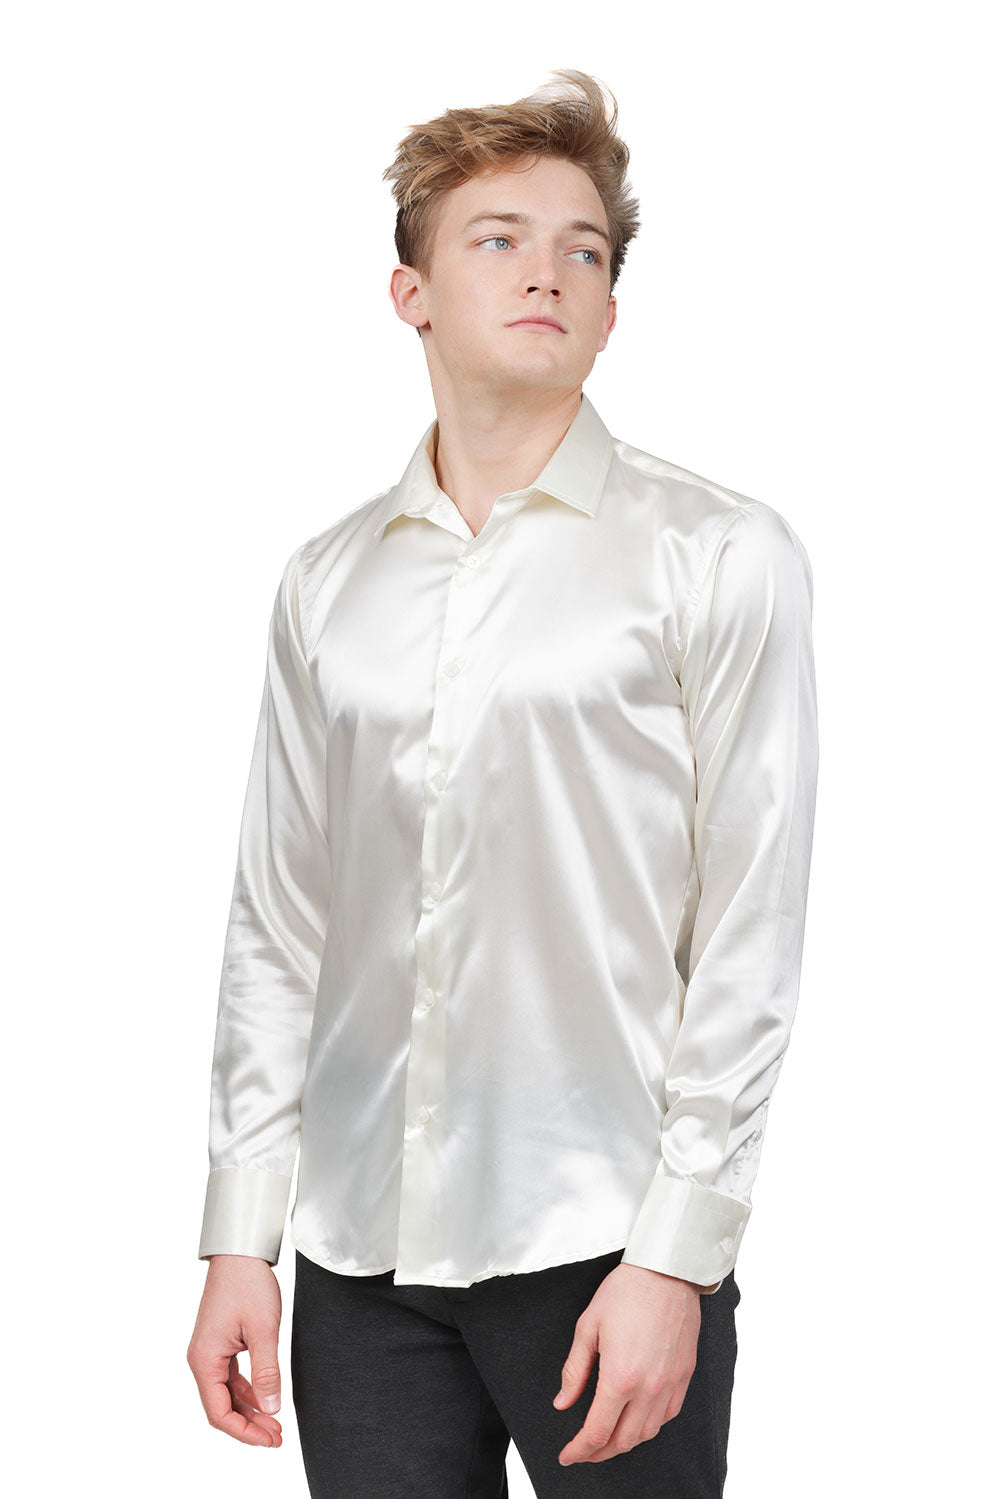 BARABAS Mens Luxury Shiny Long Sleeve Button Down Metallic Shirts B312 Pearl